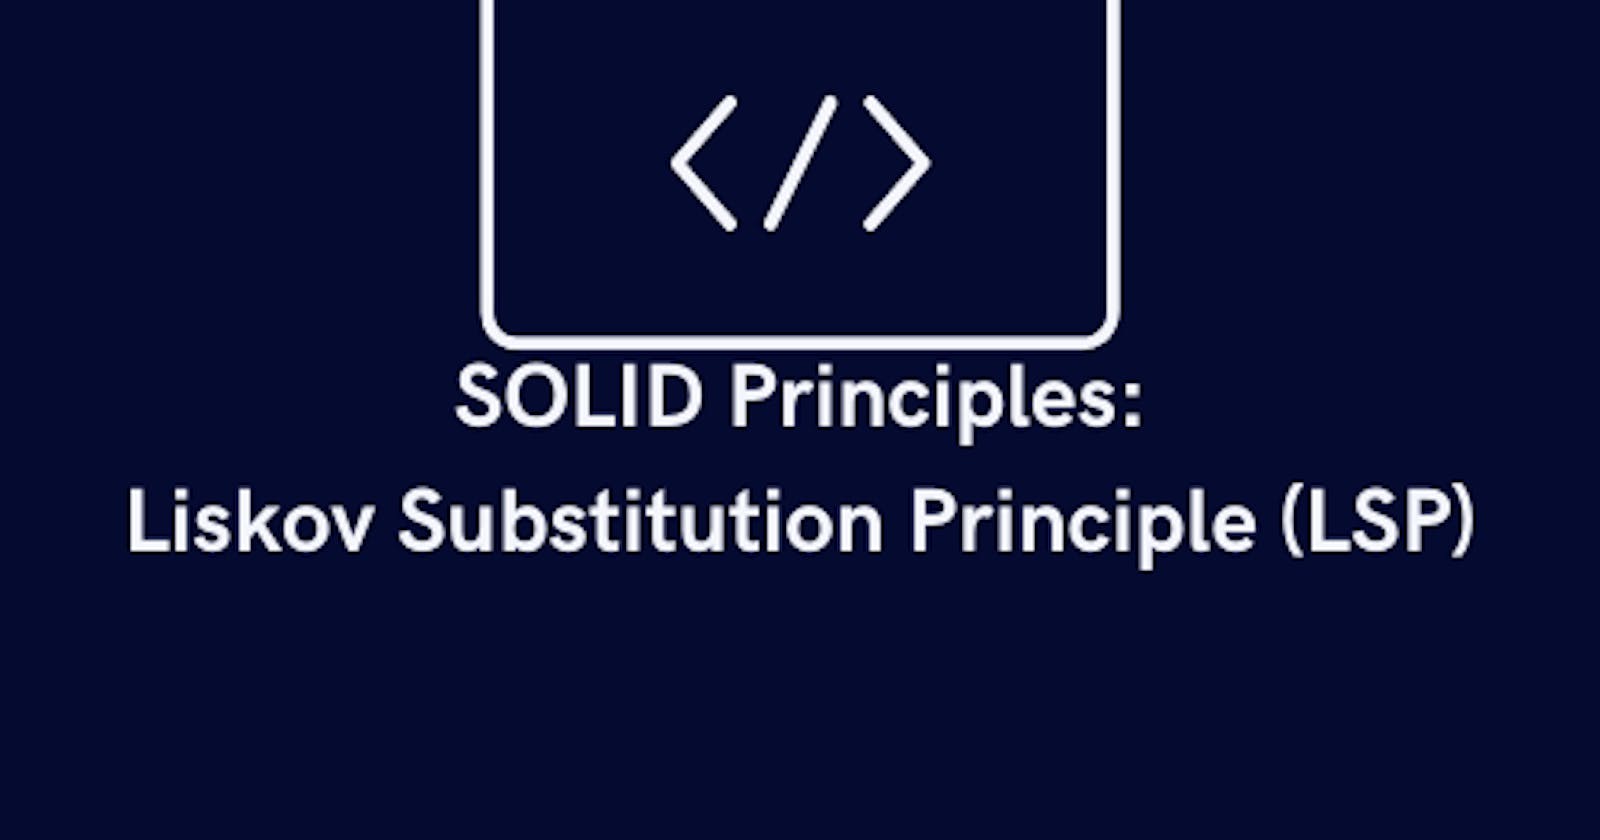 SOLID Principles: Liskov substitution Principle (LSP)